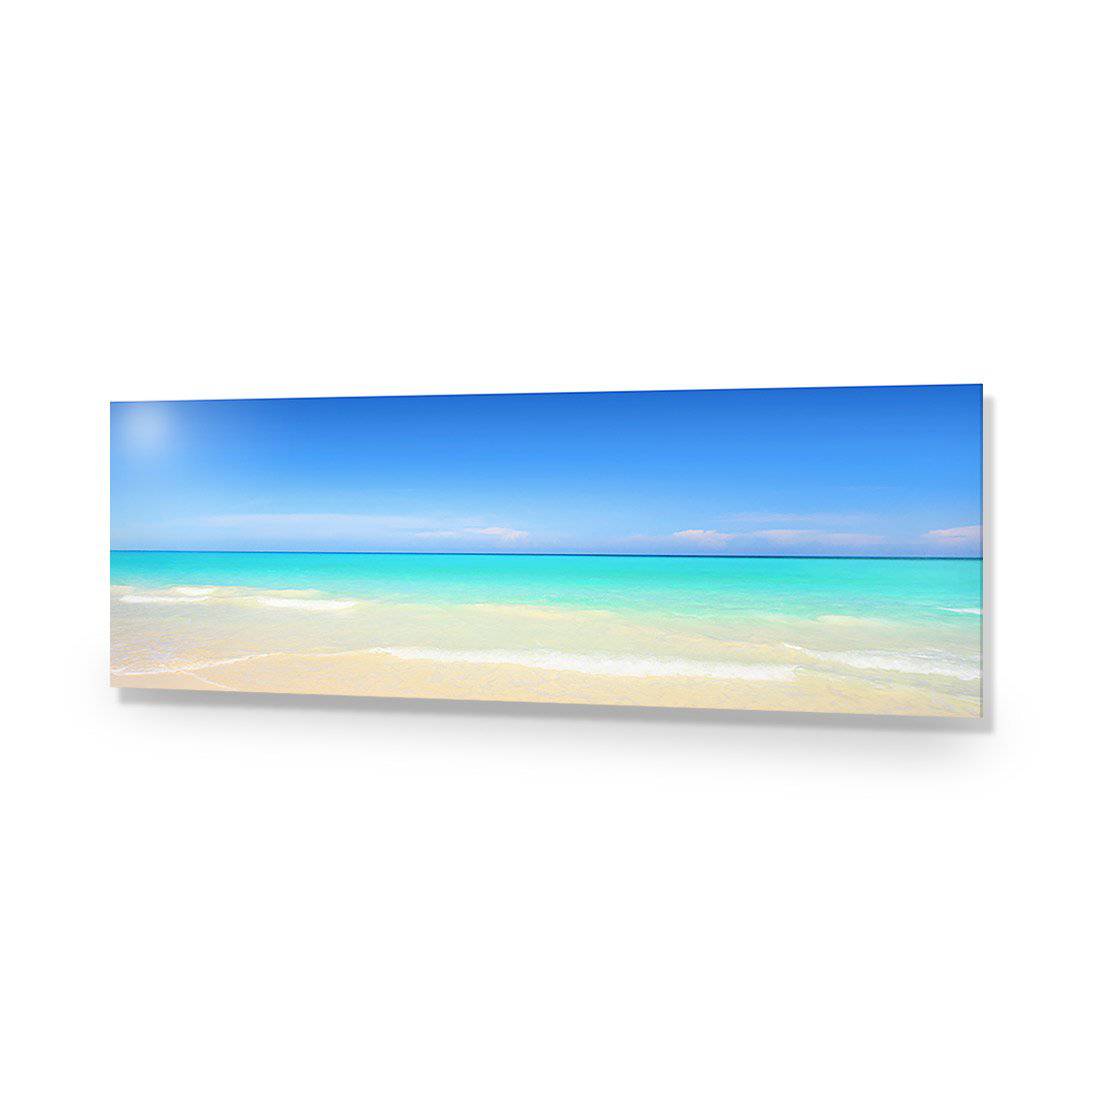 Paradise Beach, Long-Acrylic-Wall Art Design-Without Border-Acrylic - No Frame-60x20cm-Wall Art Designs